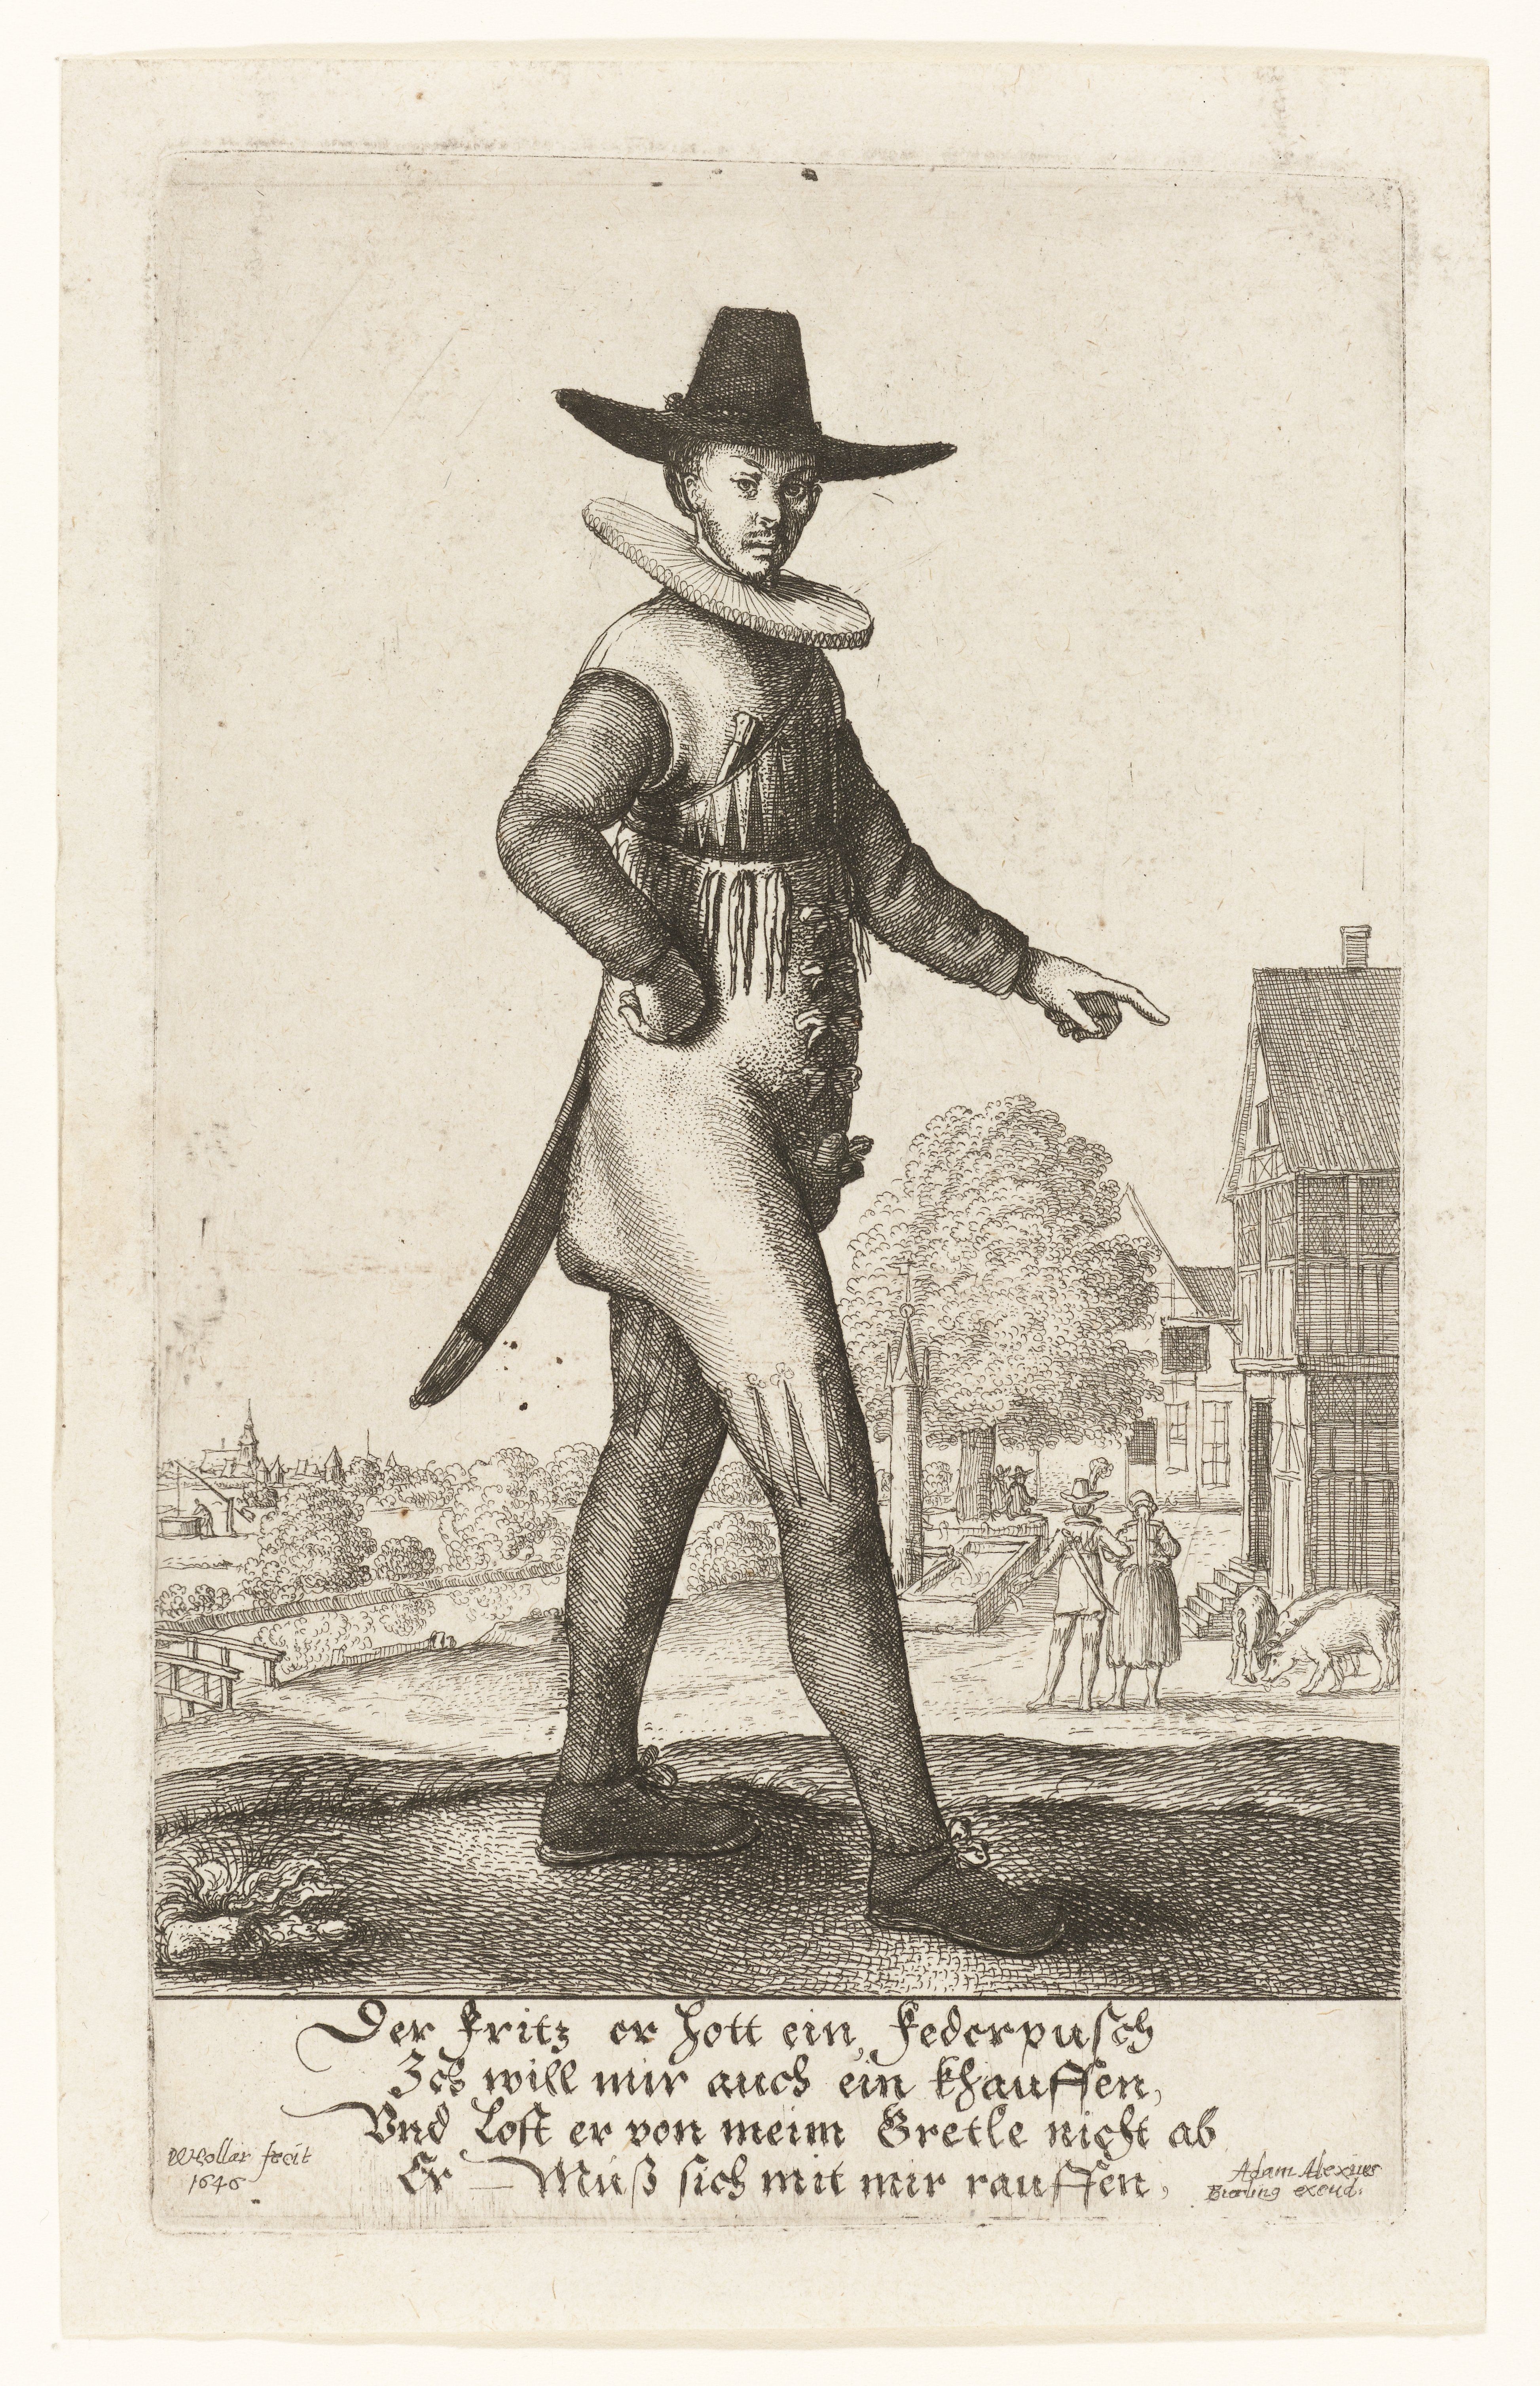 Vertolking bed Afleiden File:Jongeman met zwarte hoed, grote kraag en sabel Jaloerse jongeman,  RP-P-OB-11.588.jpg - Wikimedia Commons